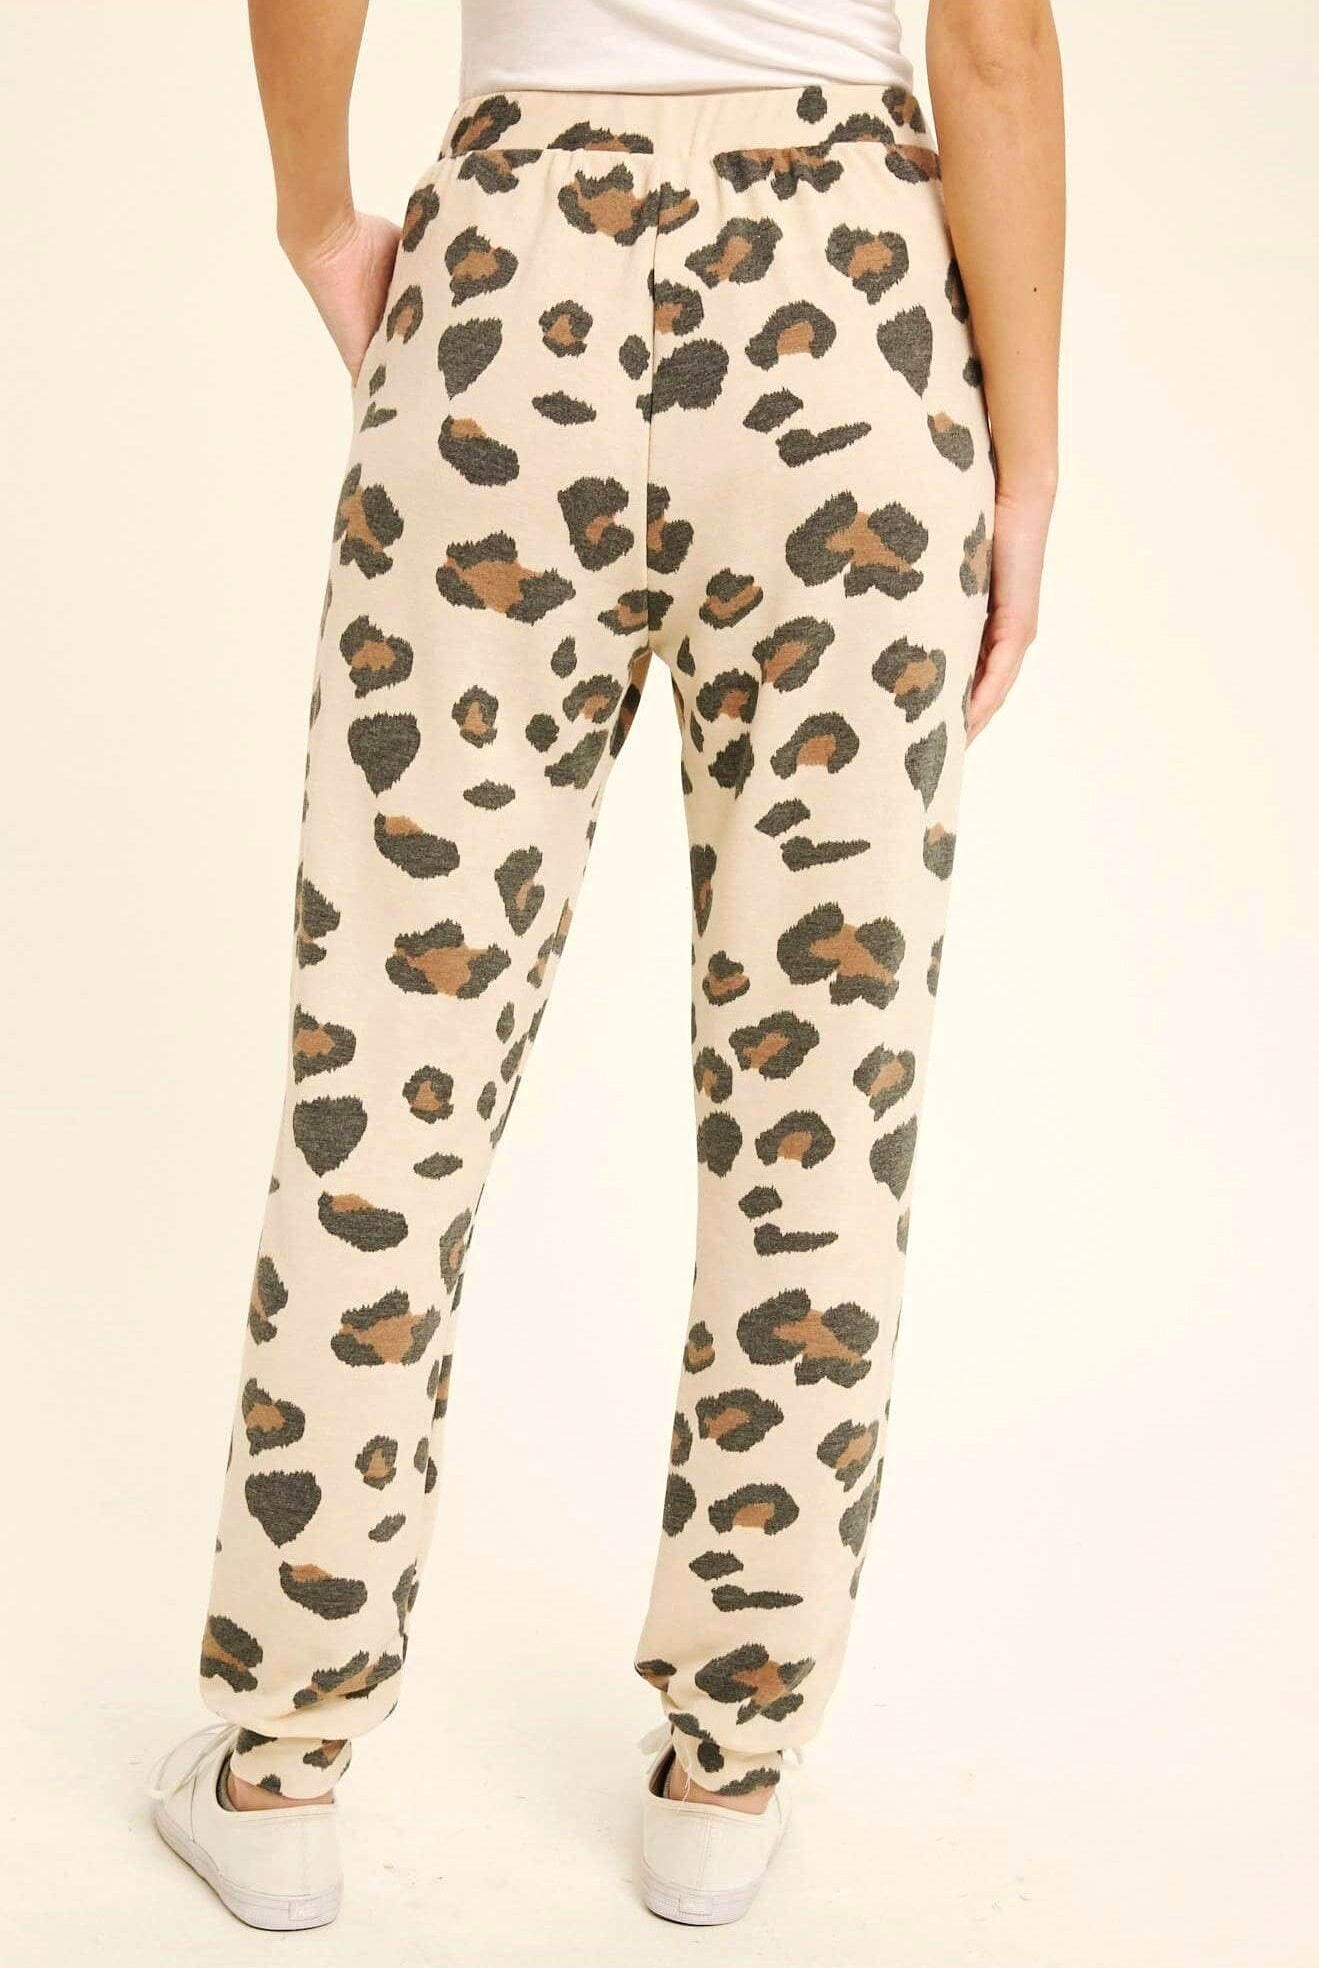 Leopard Jogger Pants - Oatmeal/Brown - Bunky & Marie's Boutique